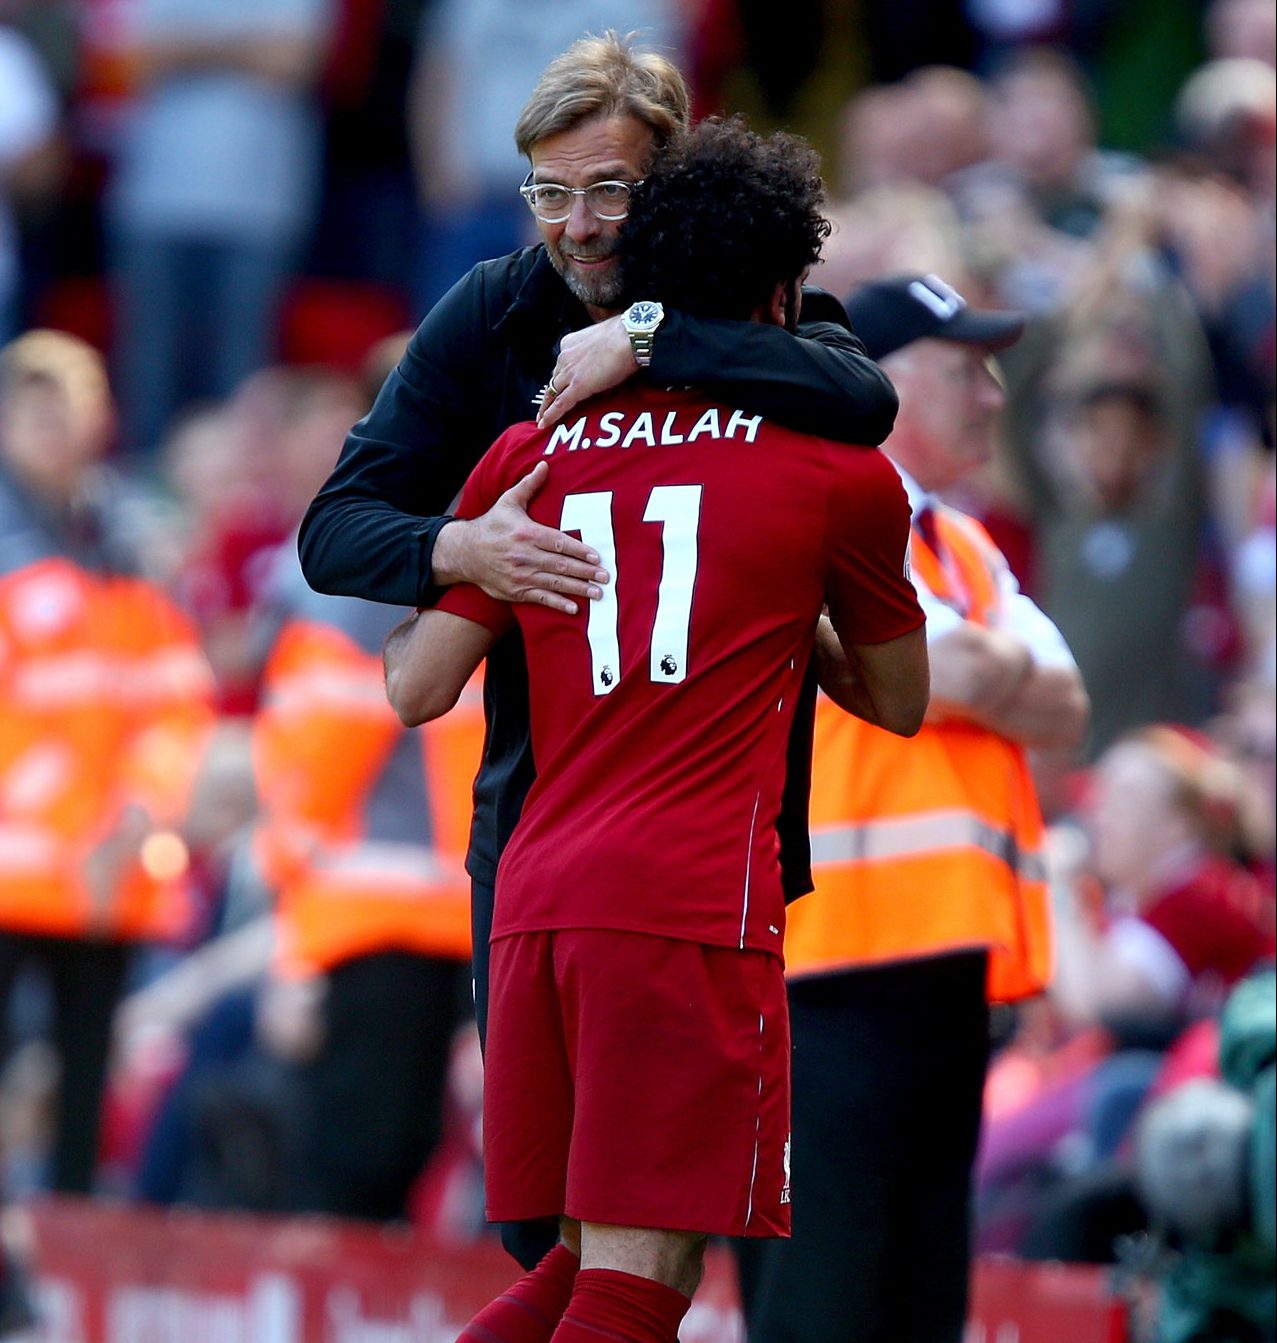 Salah Refreshed After Break – Klopp